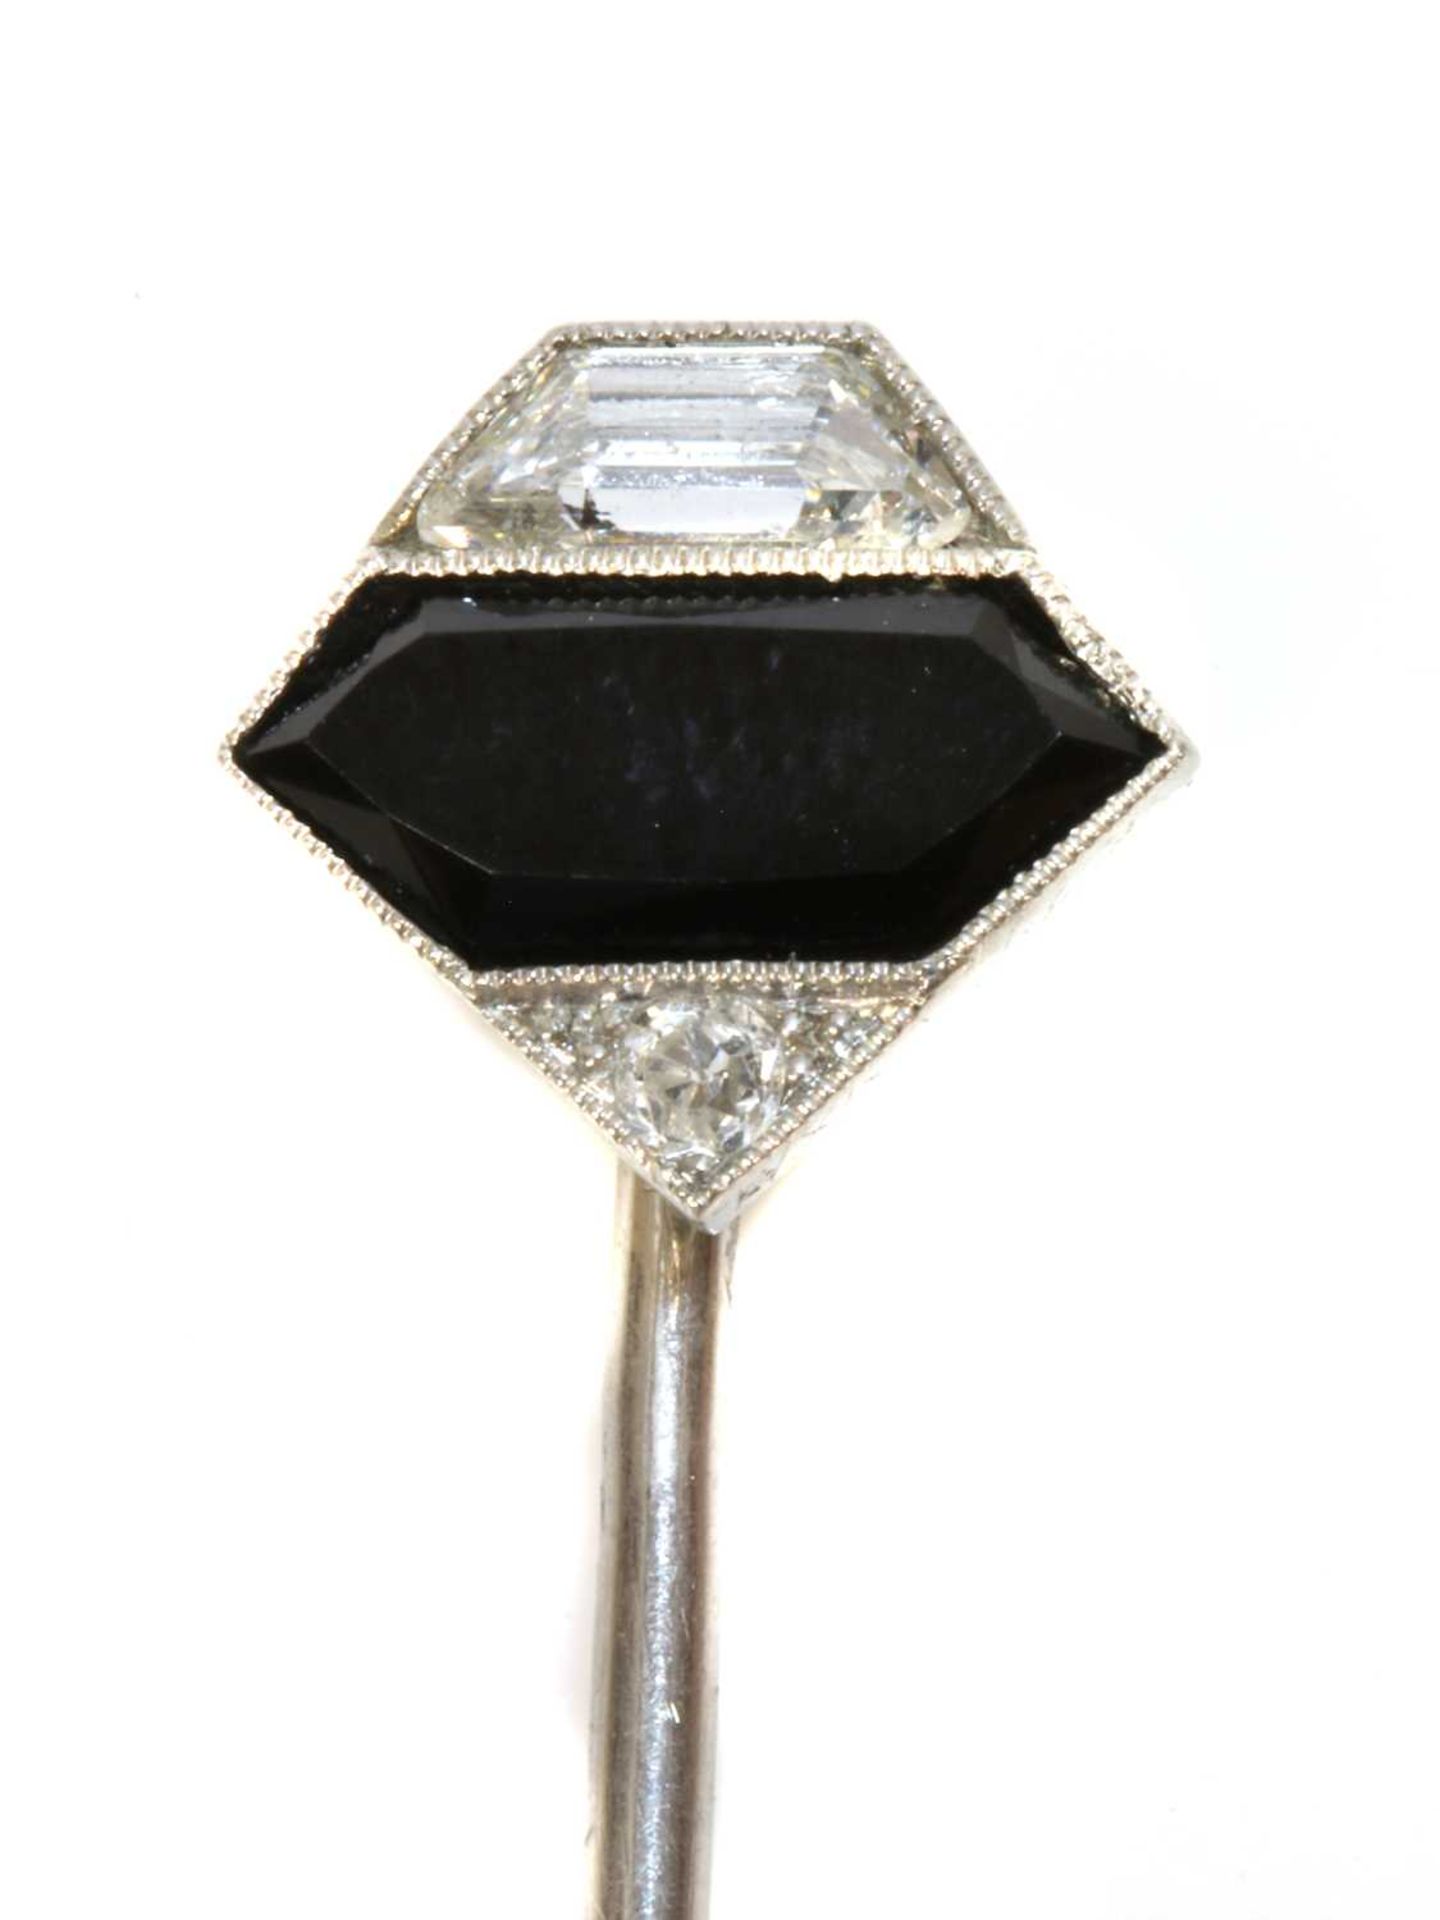 Three Art Deco diamond set stick pins, - Image 4 of 4